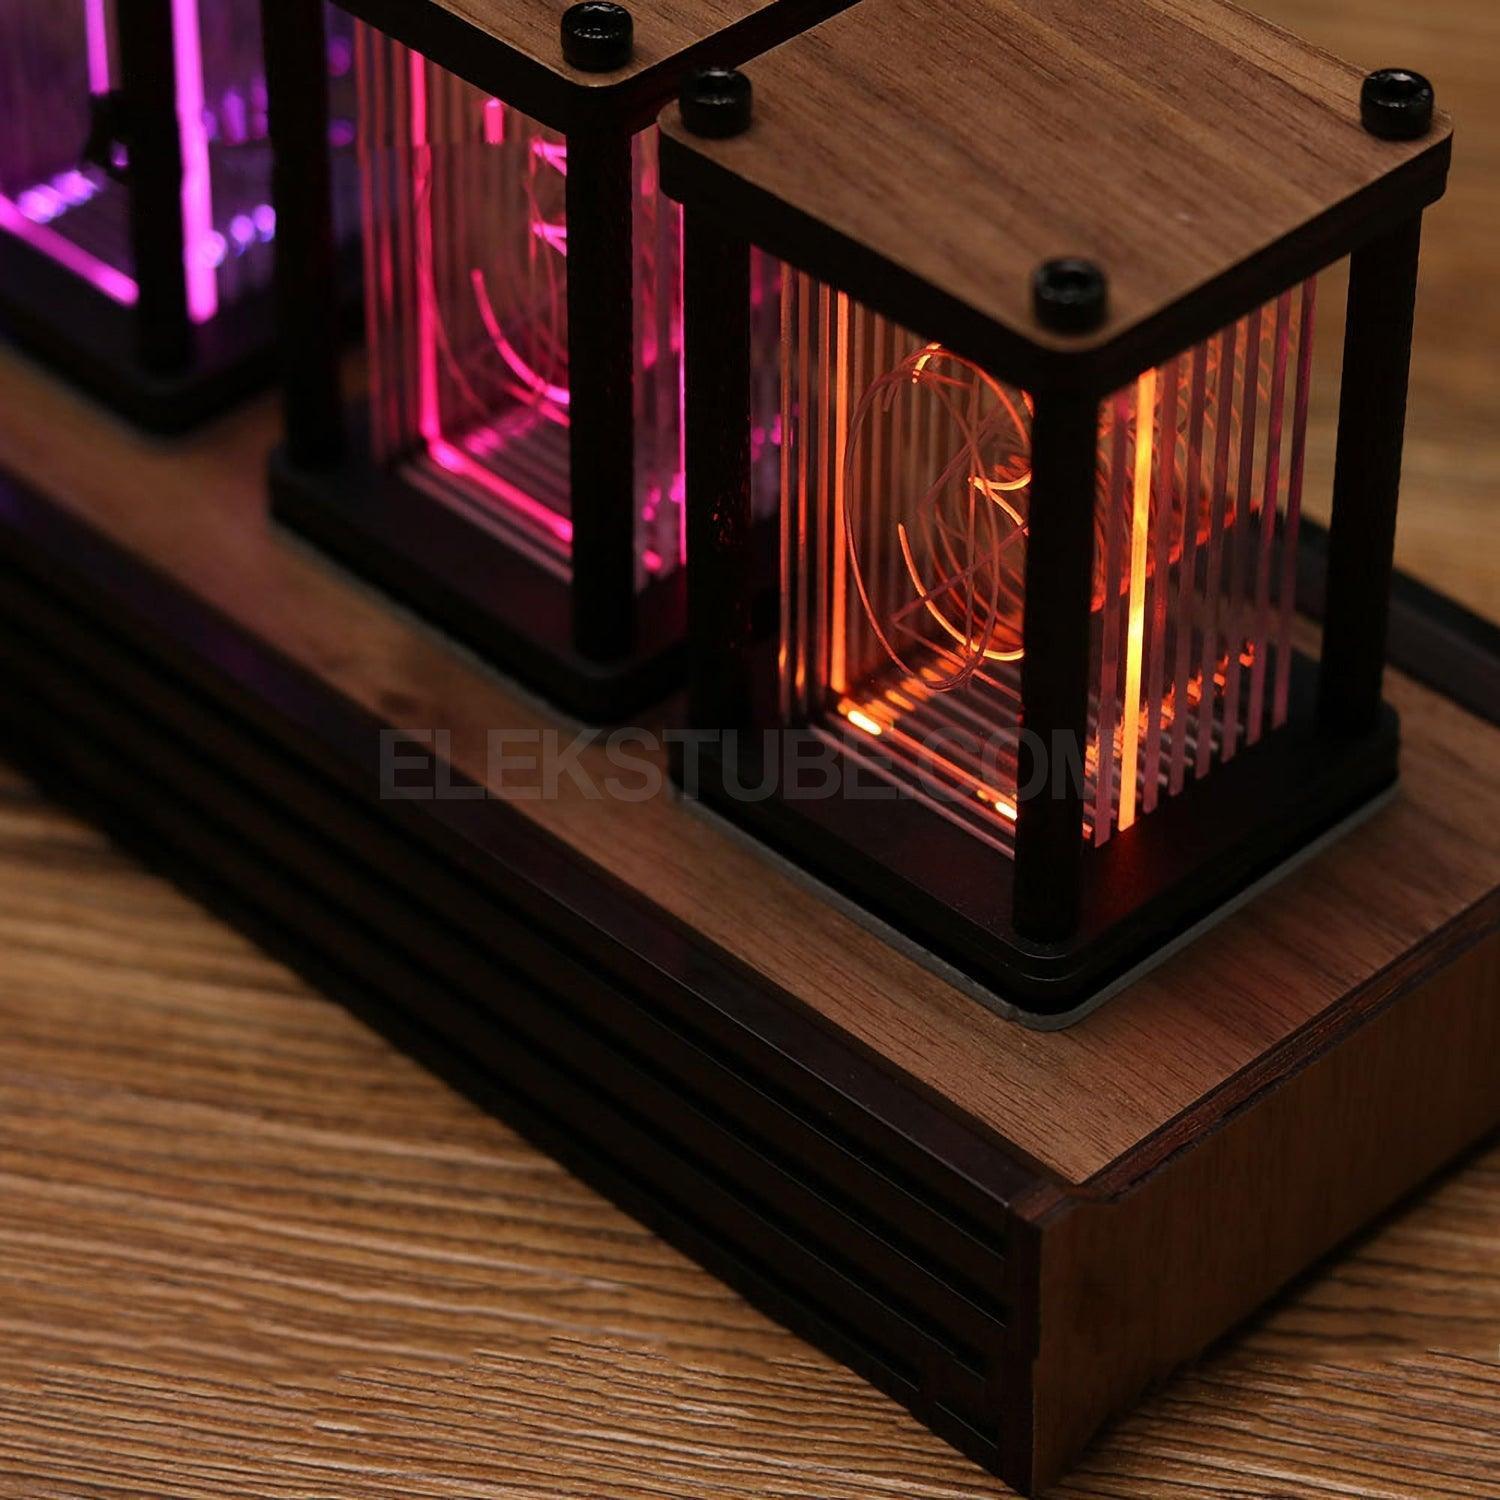 Elekstube R 6-Bit Kit Electronic Led Luminous Retro Glows Analog Nixie Tube Clock - EleksTube IPS Global - EleksMaker